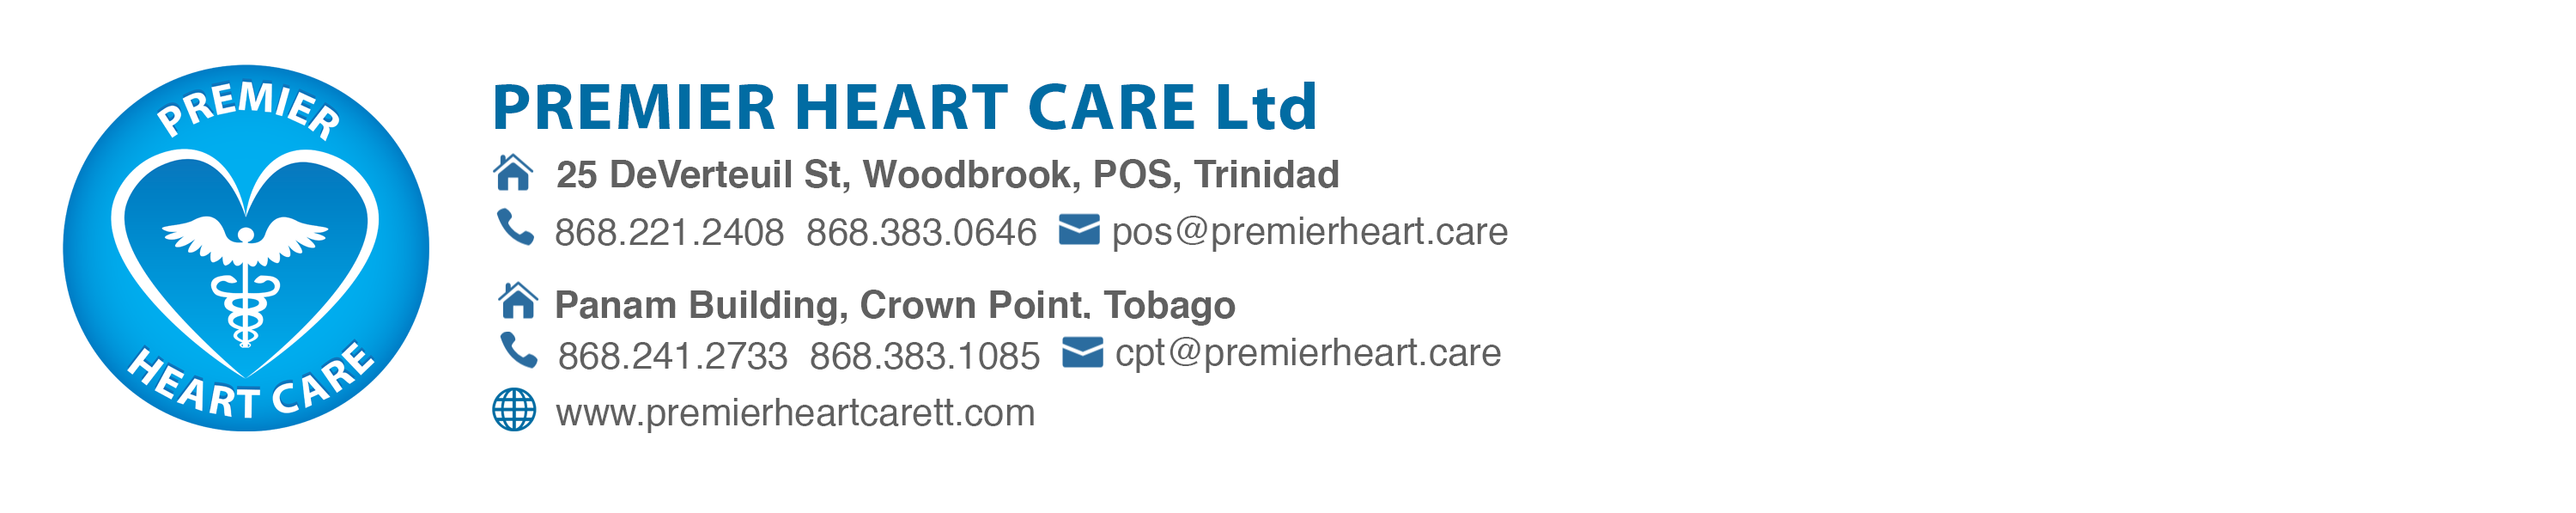 Premier Heart Care Ltd.